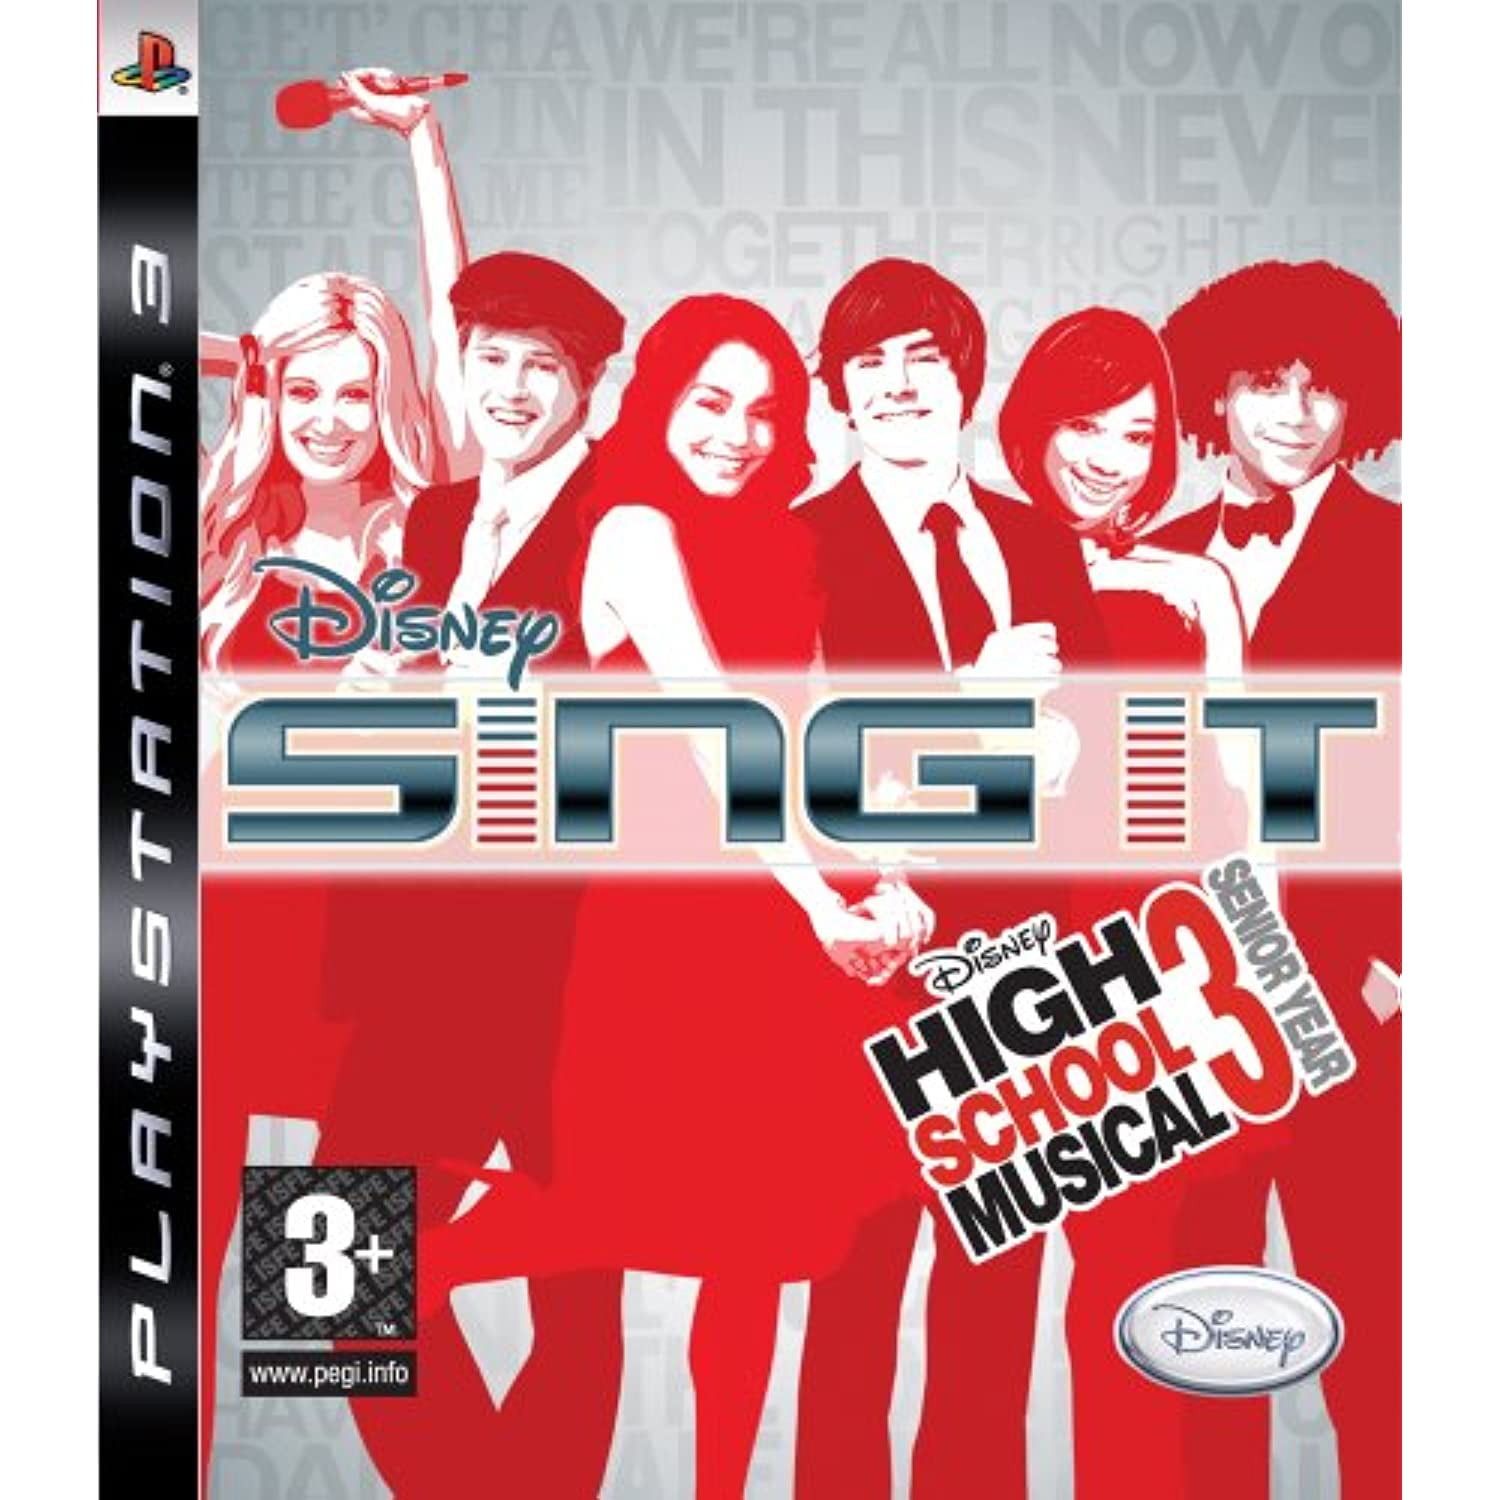 krystal anker Rend High School Musical 3: Senior Year Sing It No Microphone (Solus) /Ps3 -  Walmart.com